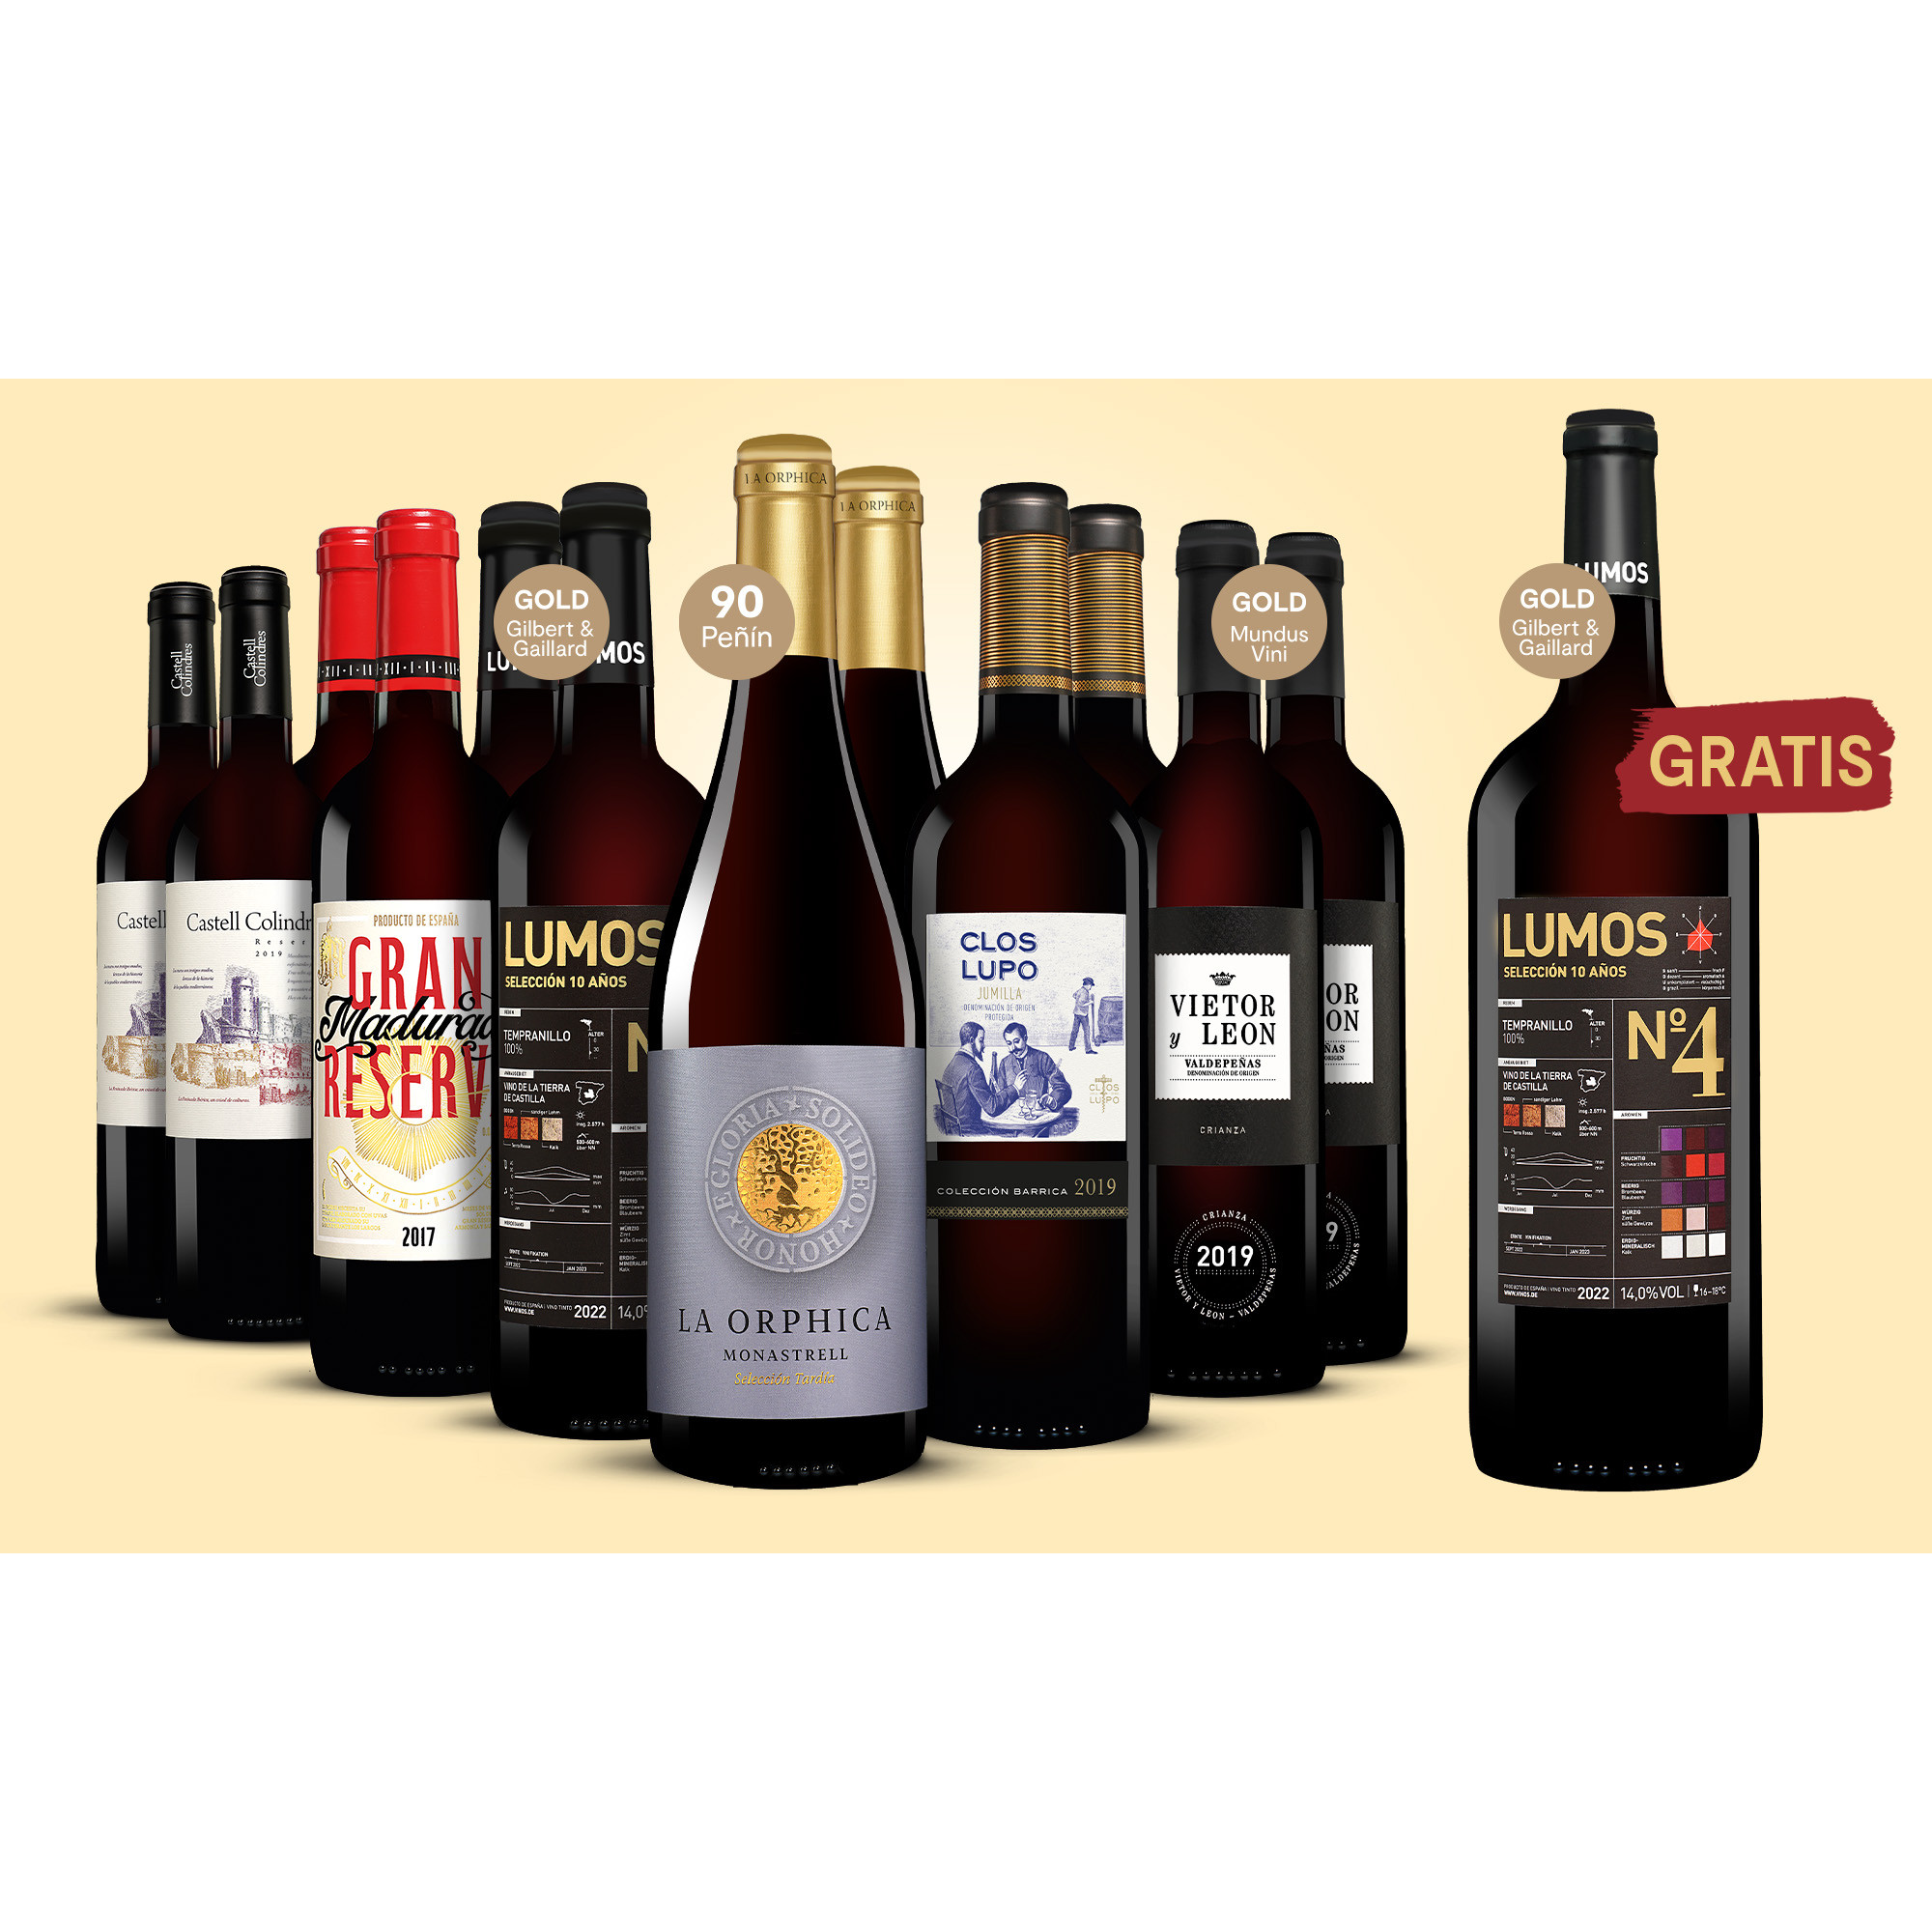 Topseller-Paket + GRATIS LUMOS No.4  10.5L Weinpaket aus Spanien 37764 vinos DE